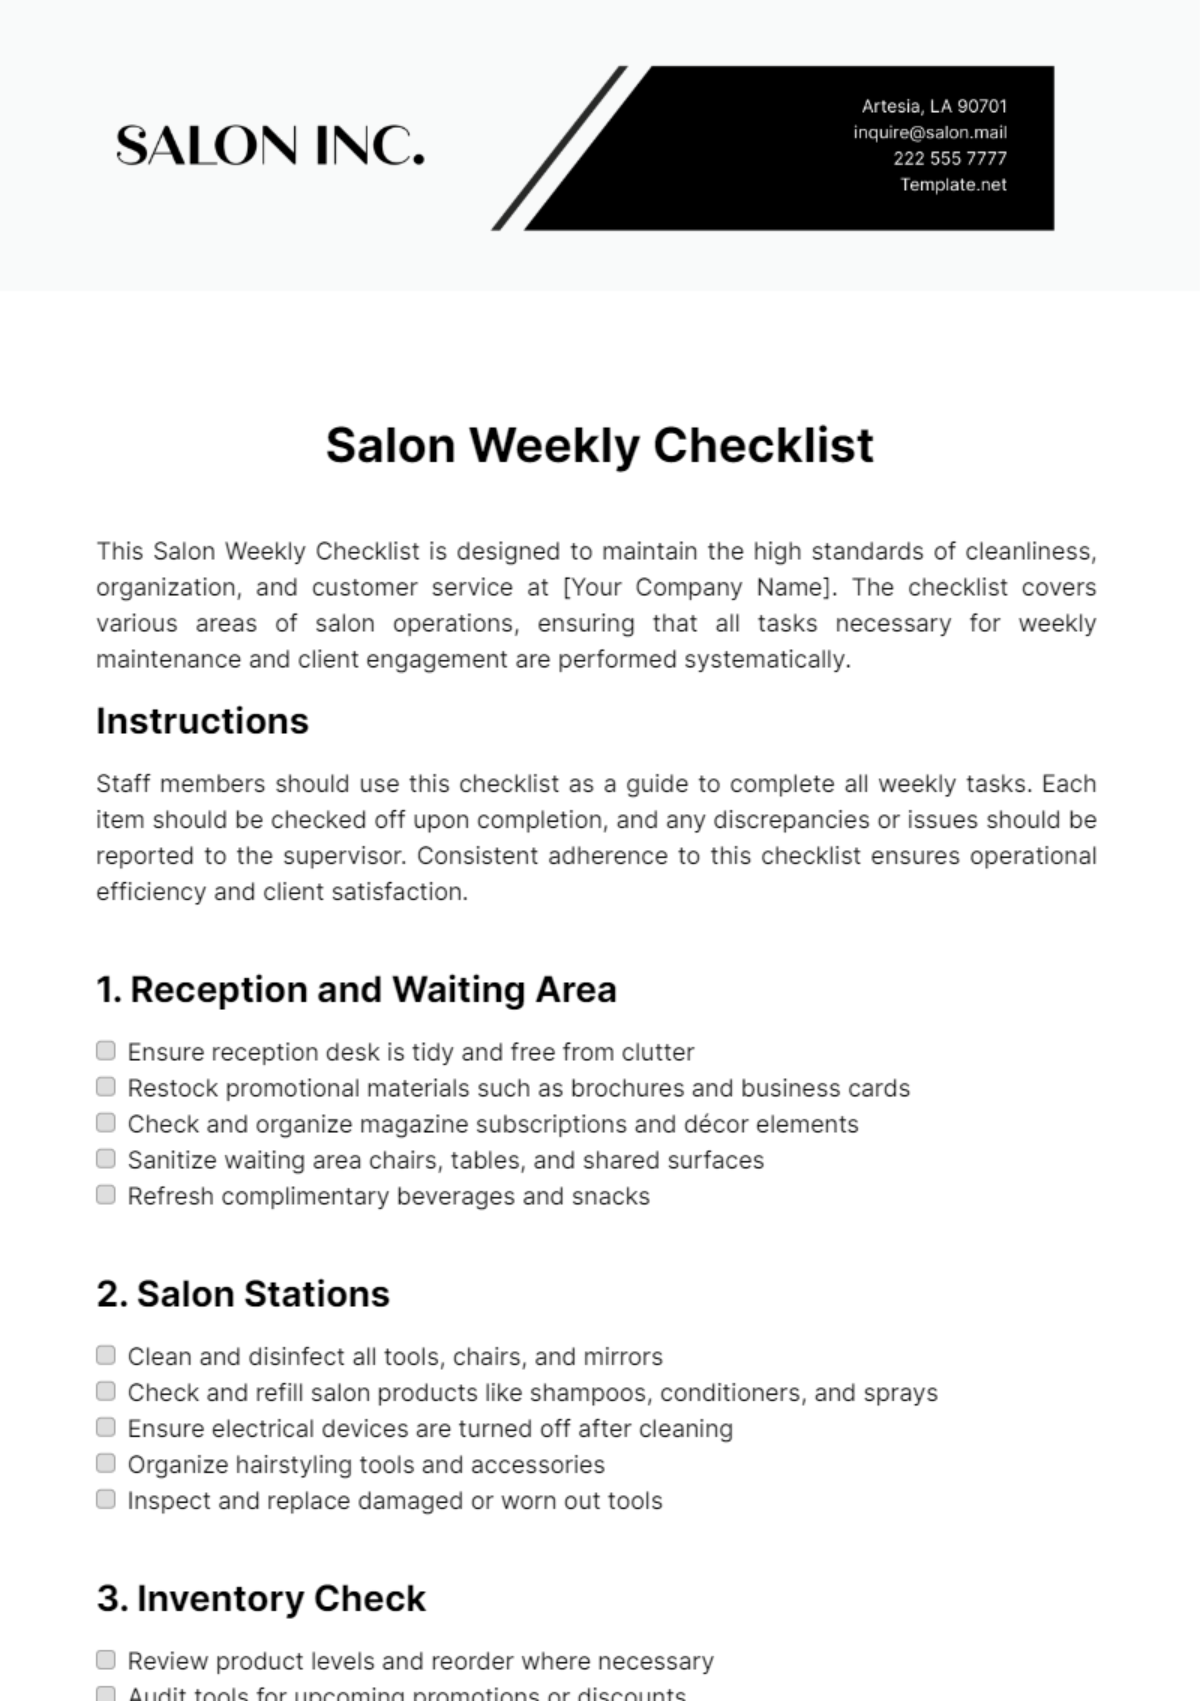 Salon Weekly Checklist Template